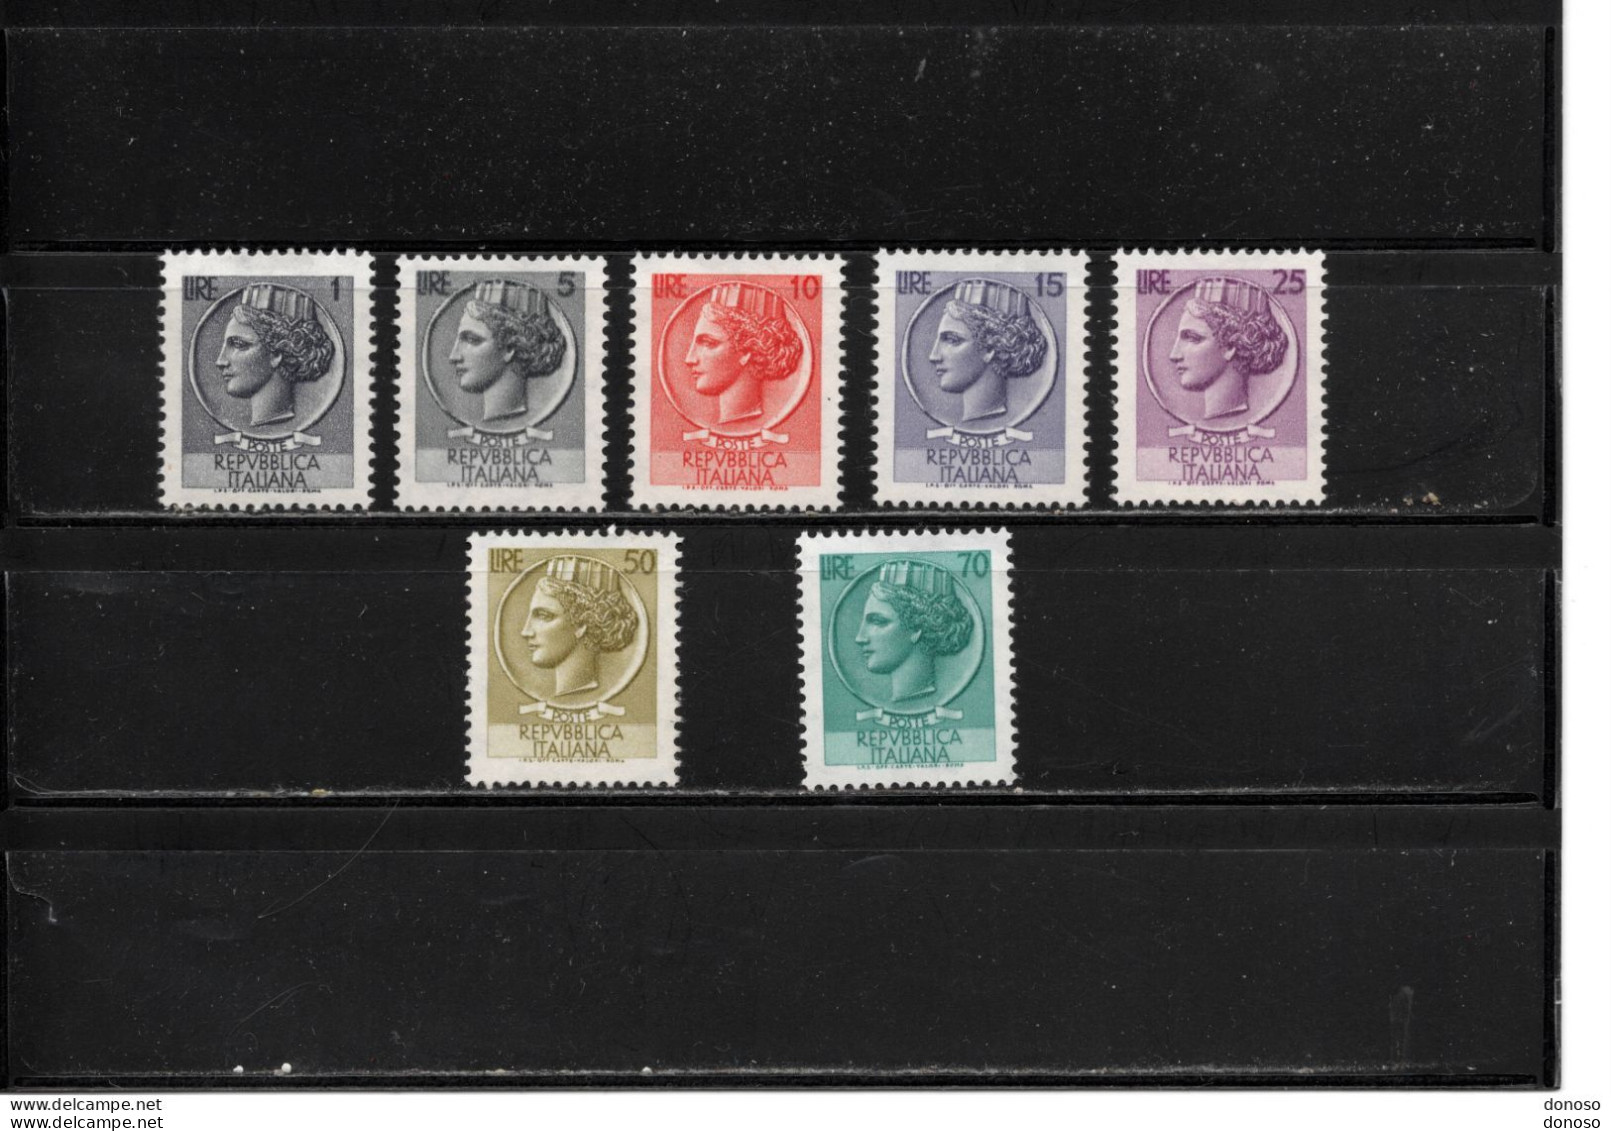 ITALIE 1968 Monnaie Syracusaine Yvert 993-994 + 996-998 + 1002 + 1004 NEUF** MNH - 1961-70: Mint/hinged